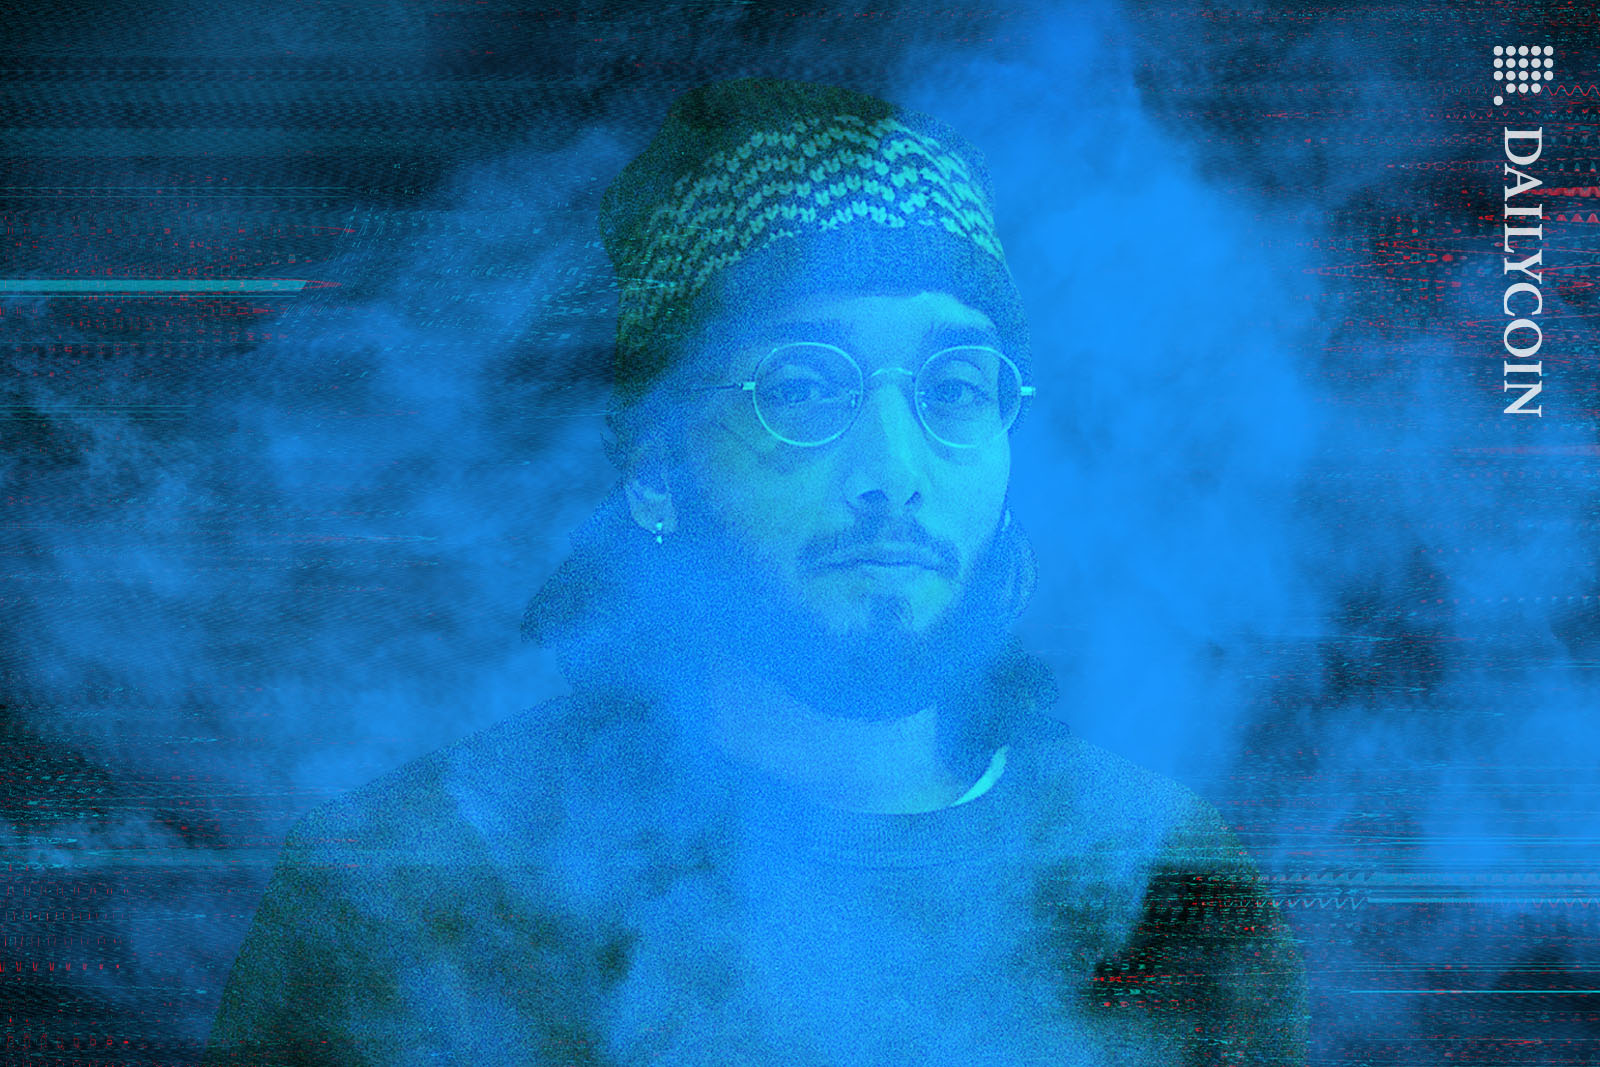 Aditya Baradwaj's face appears in blue smoke and digital glitch.